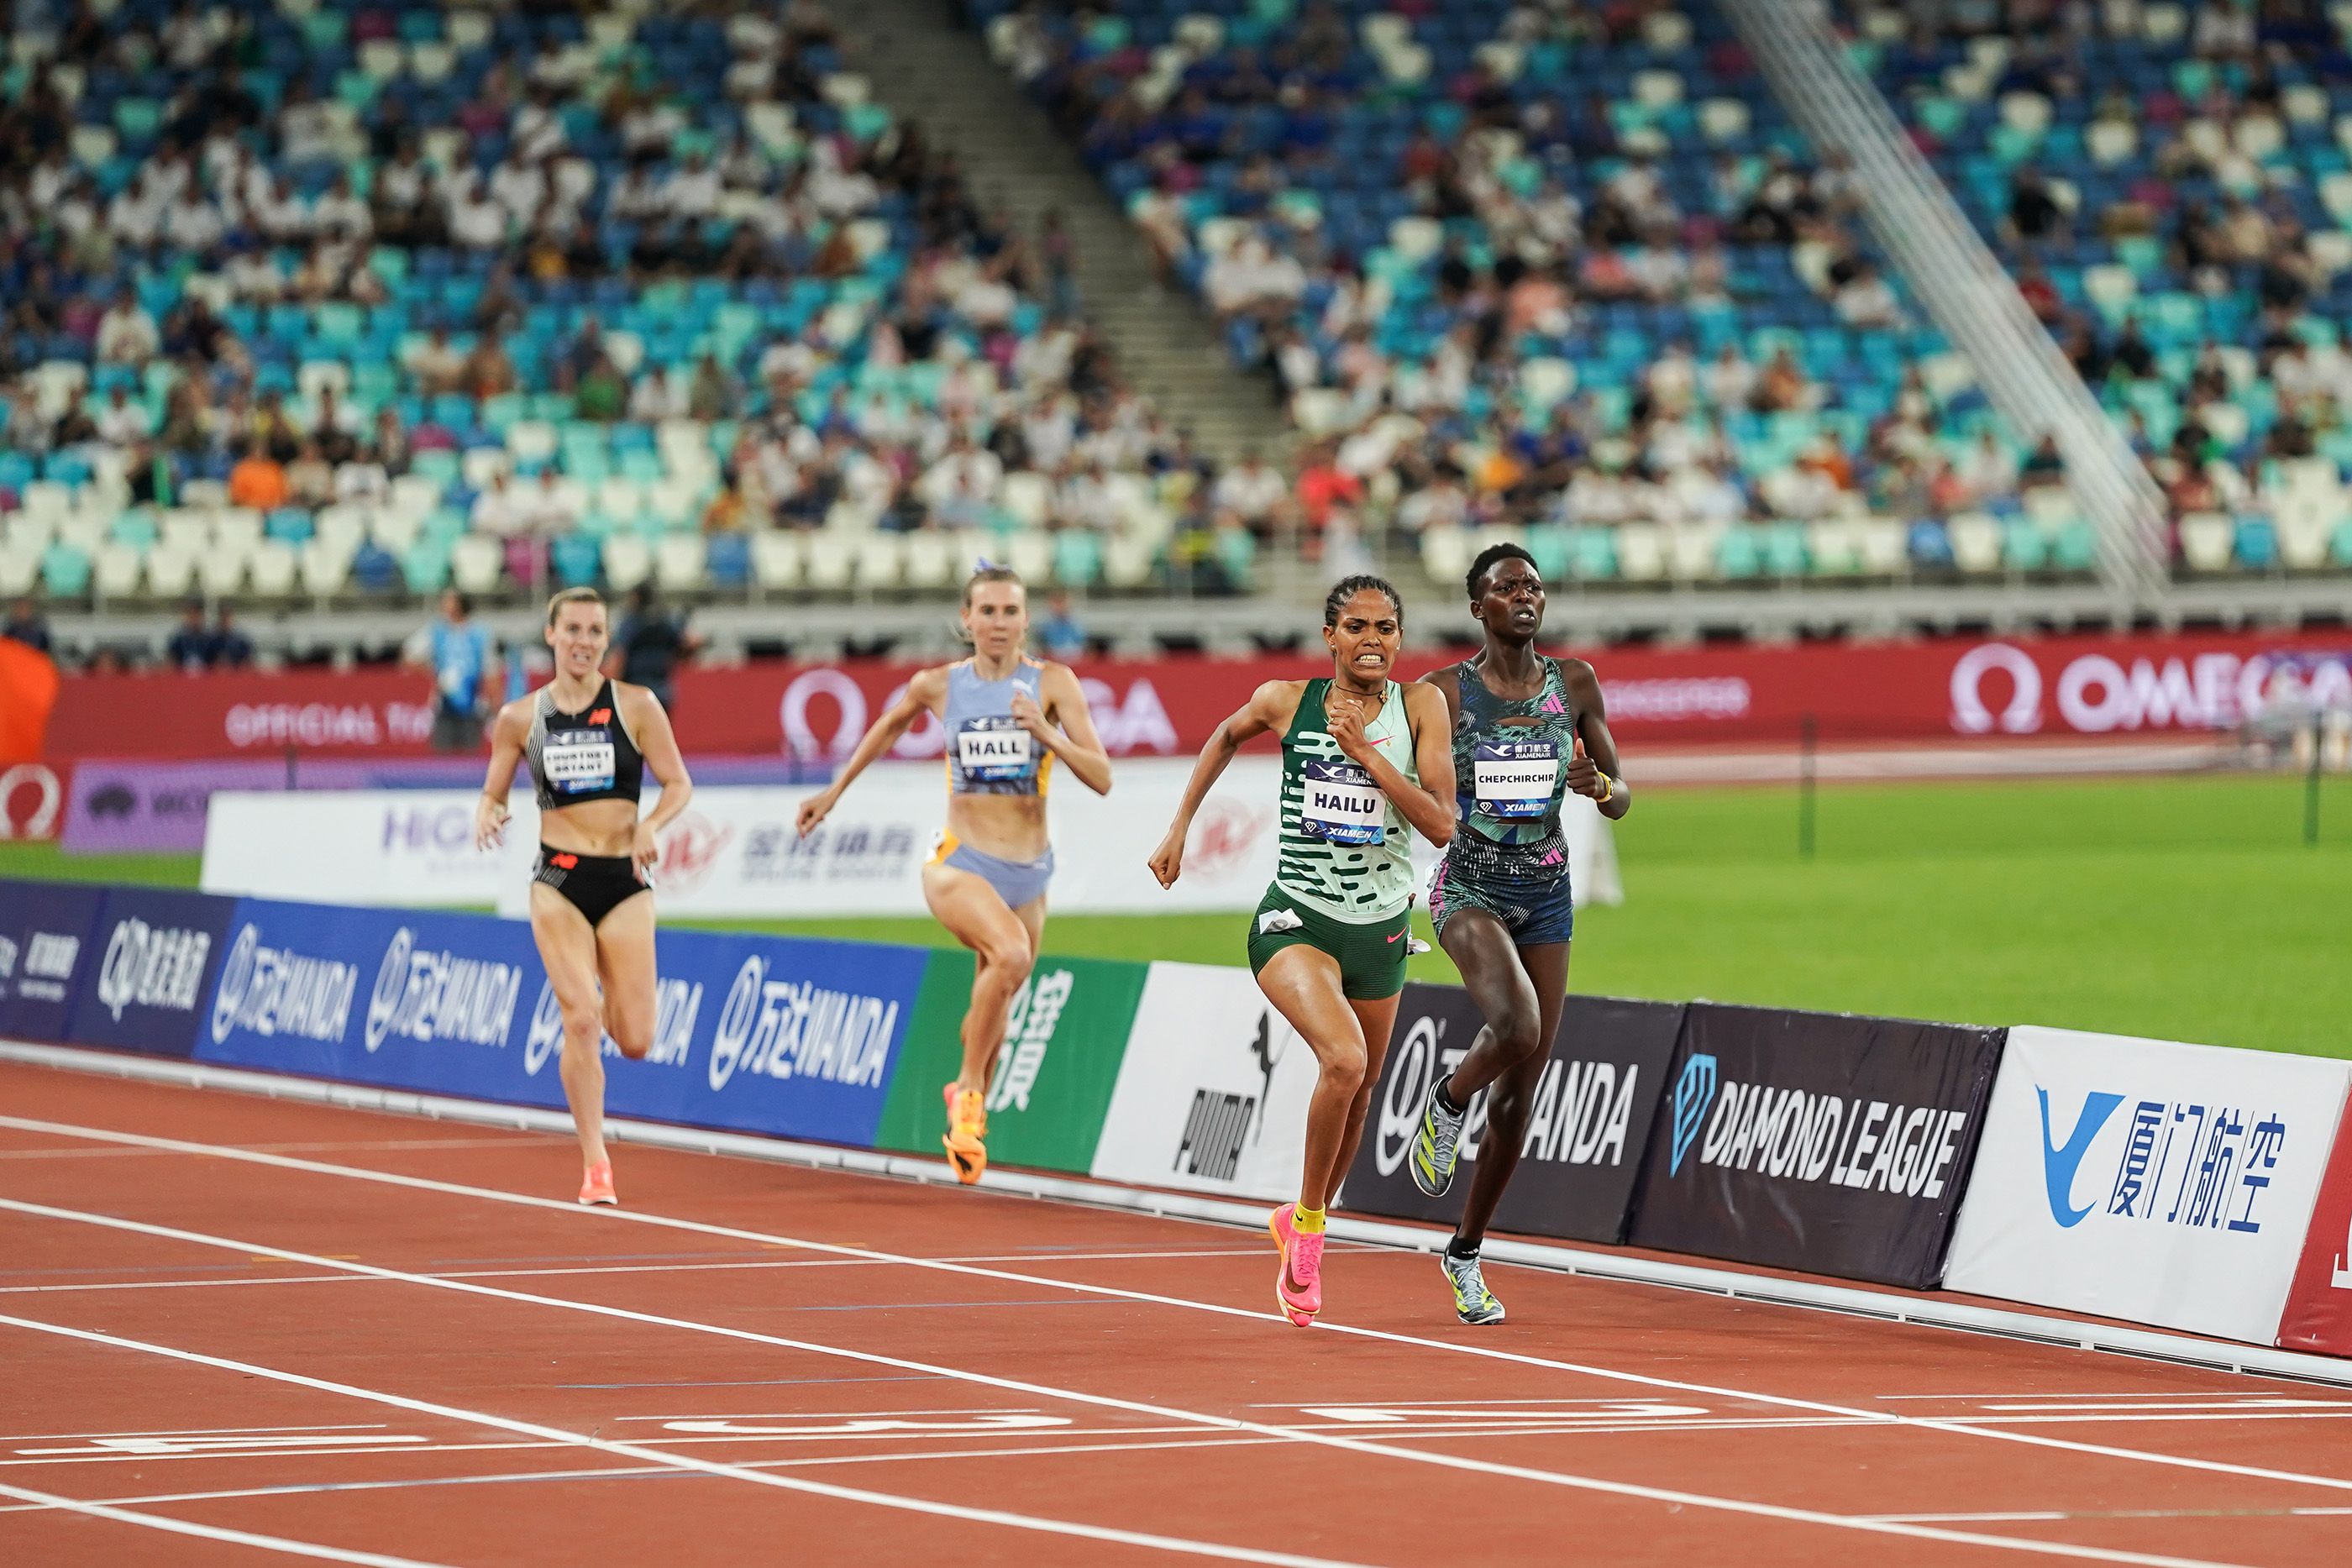 Freweyni Hailu on her way to a 1500m win in Xiamen